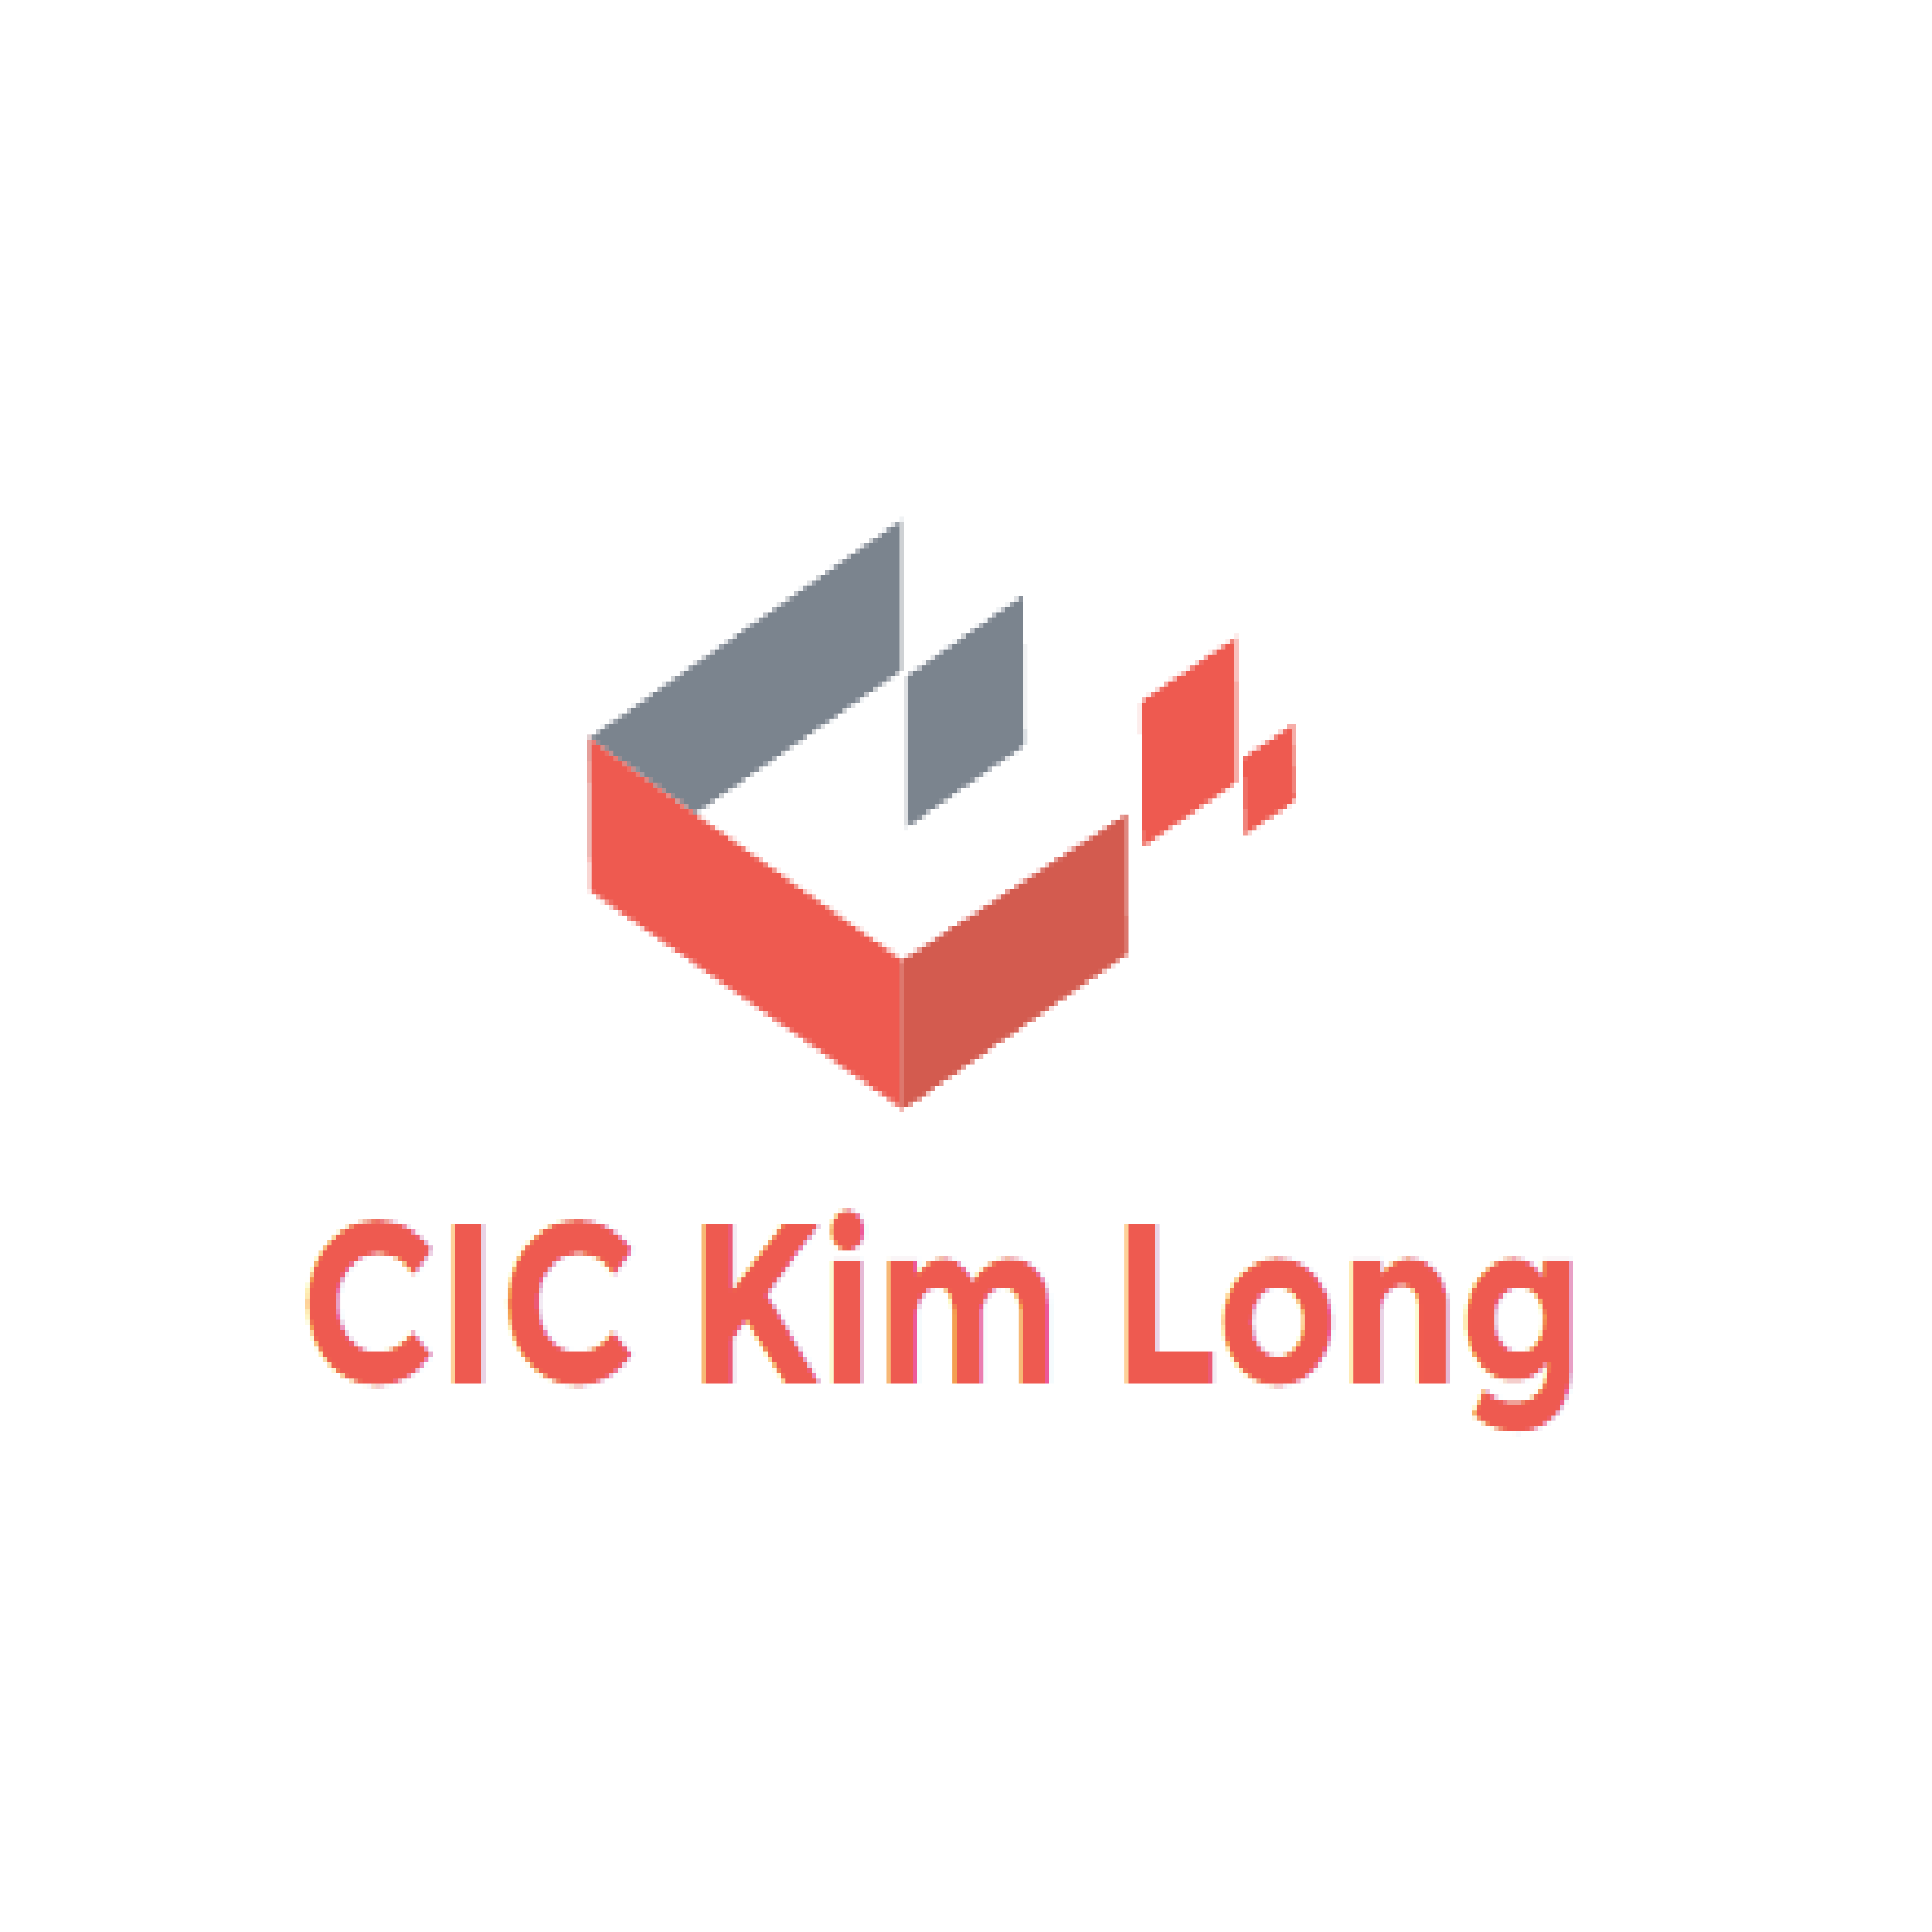 CIC Kim Long